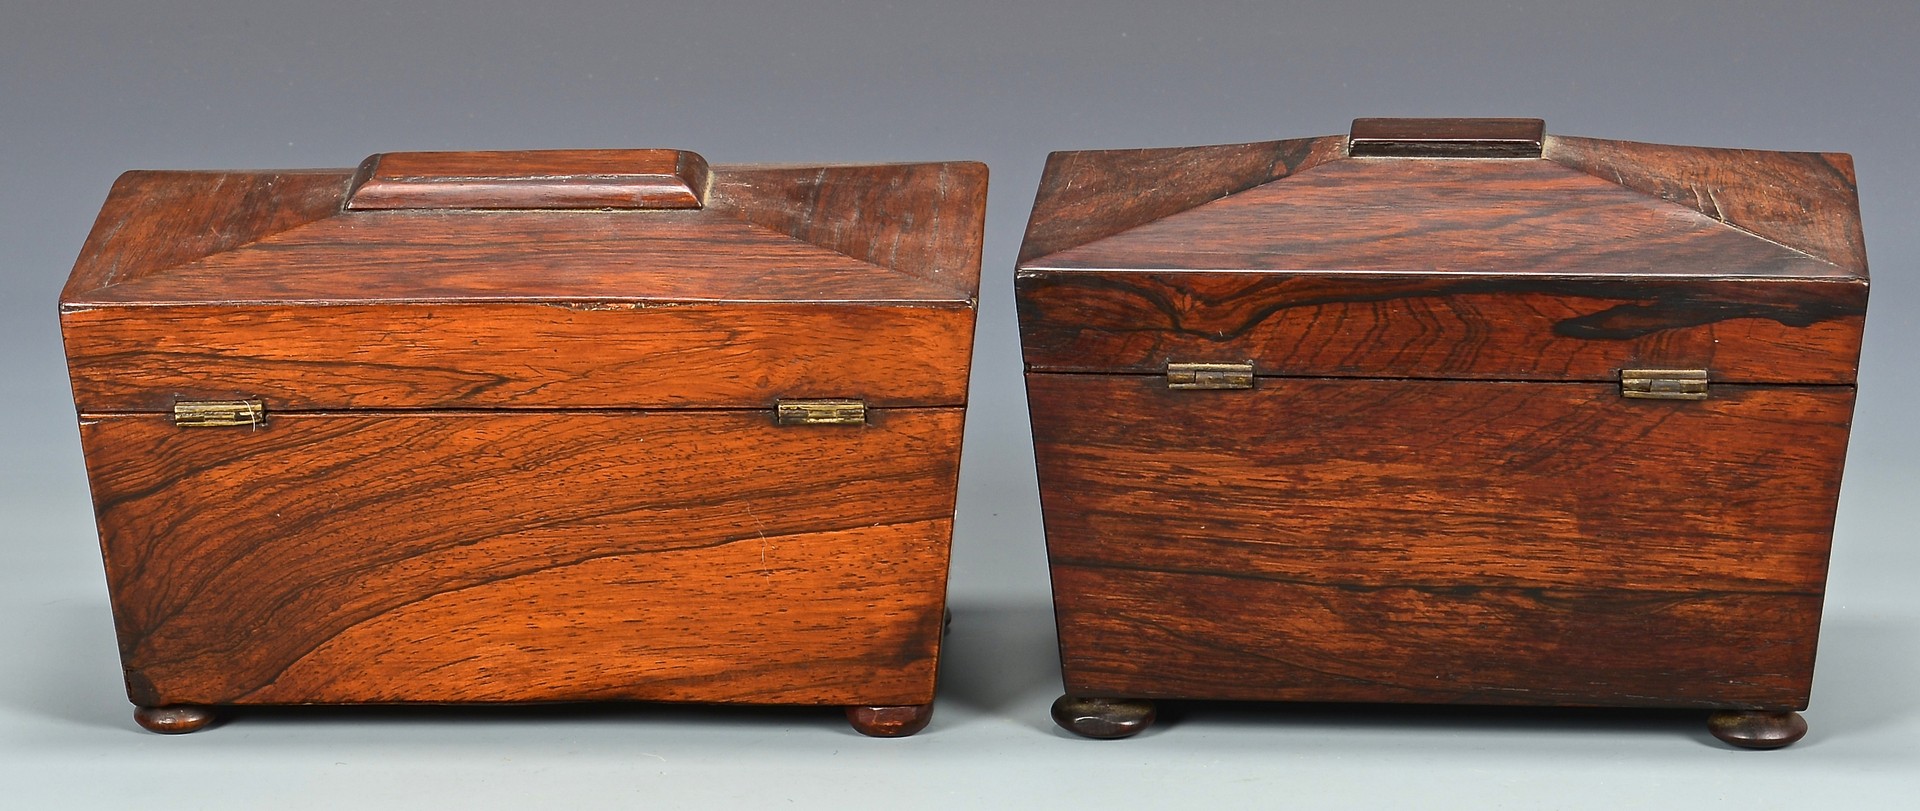 Lot 687: 5 wooden Boxes, incl. 3 Tea Caddies